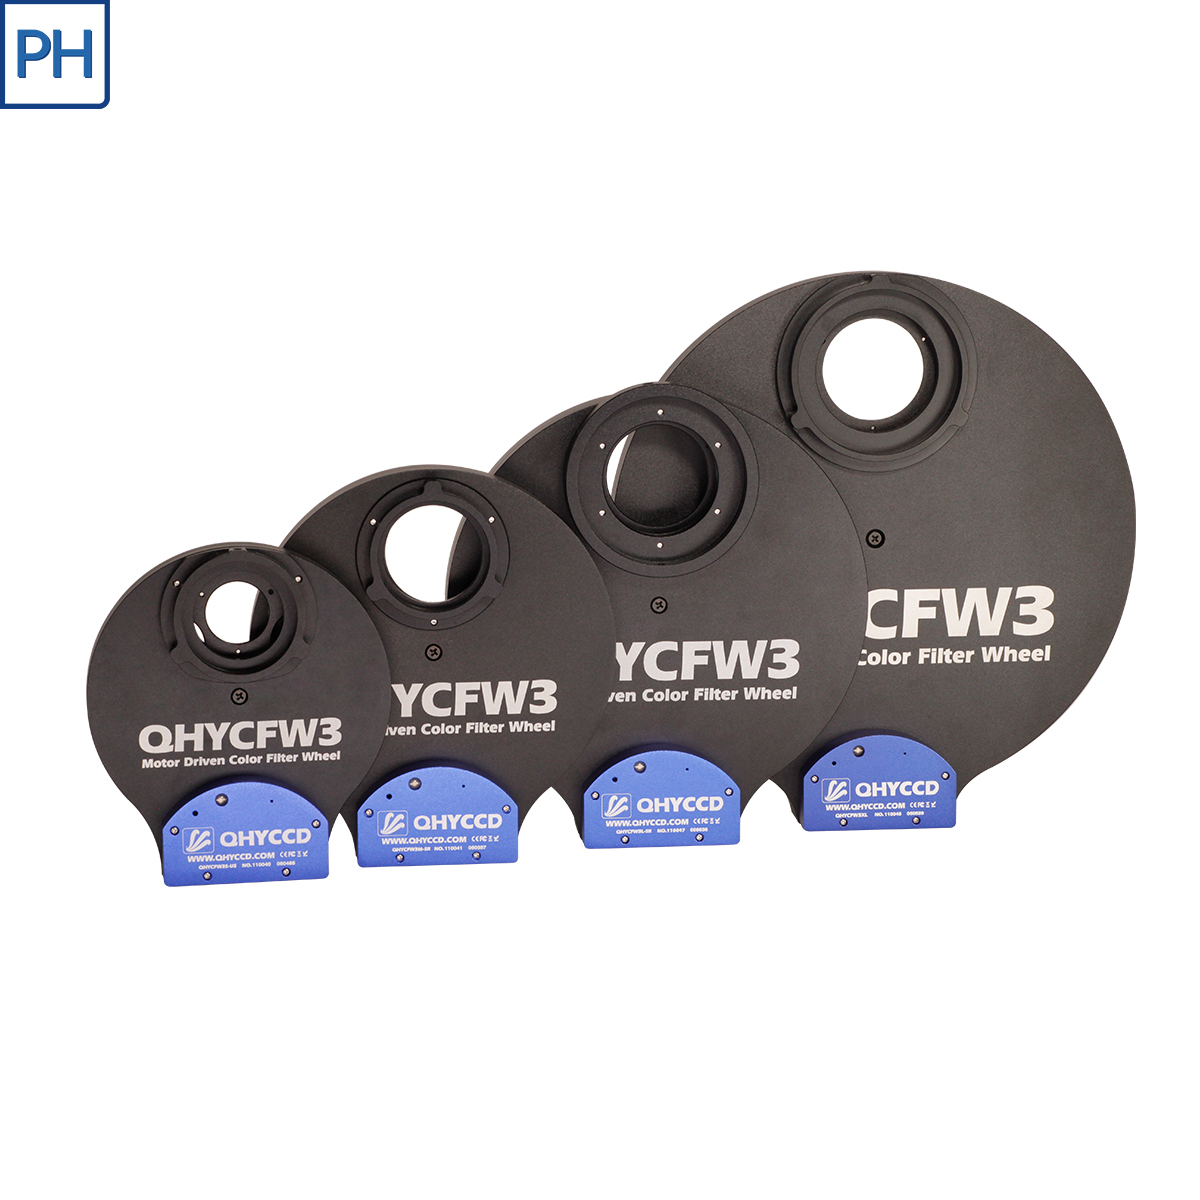 QHYCFW3 Filter Wheel